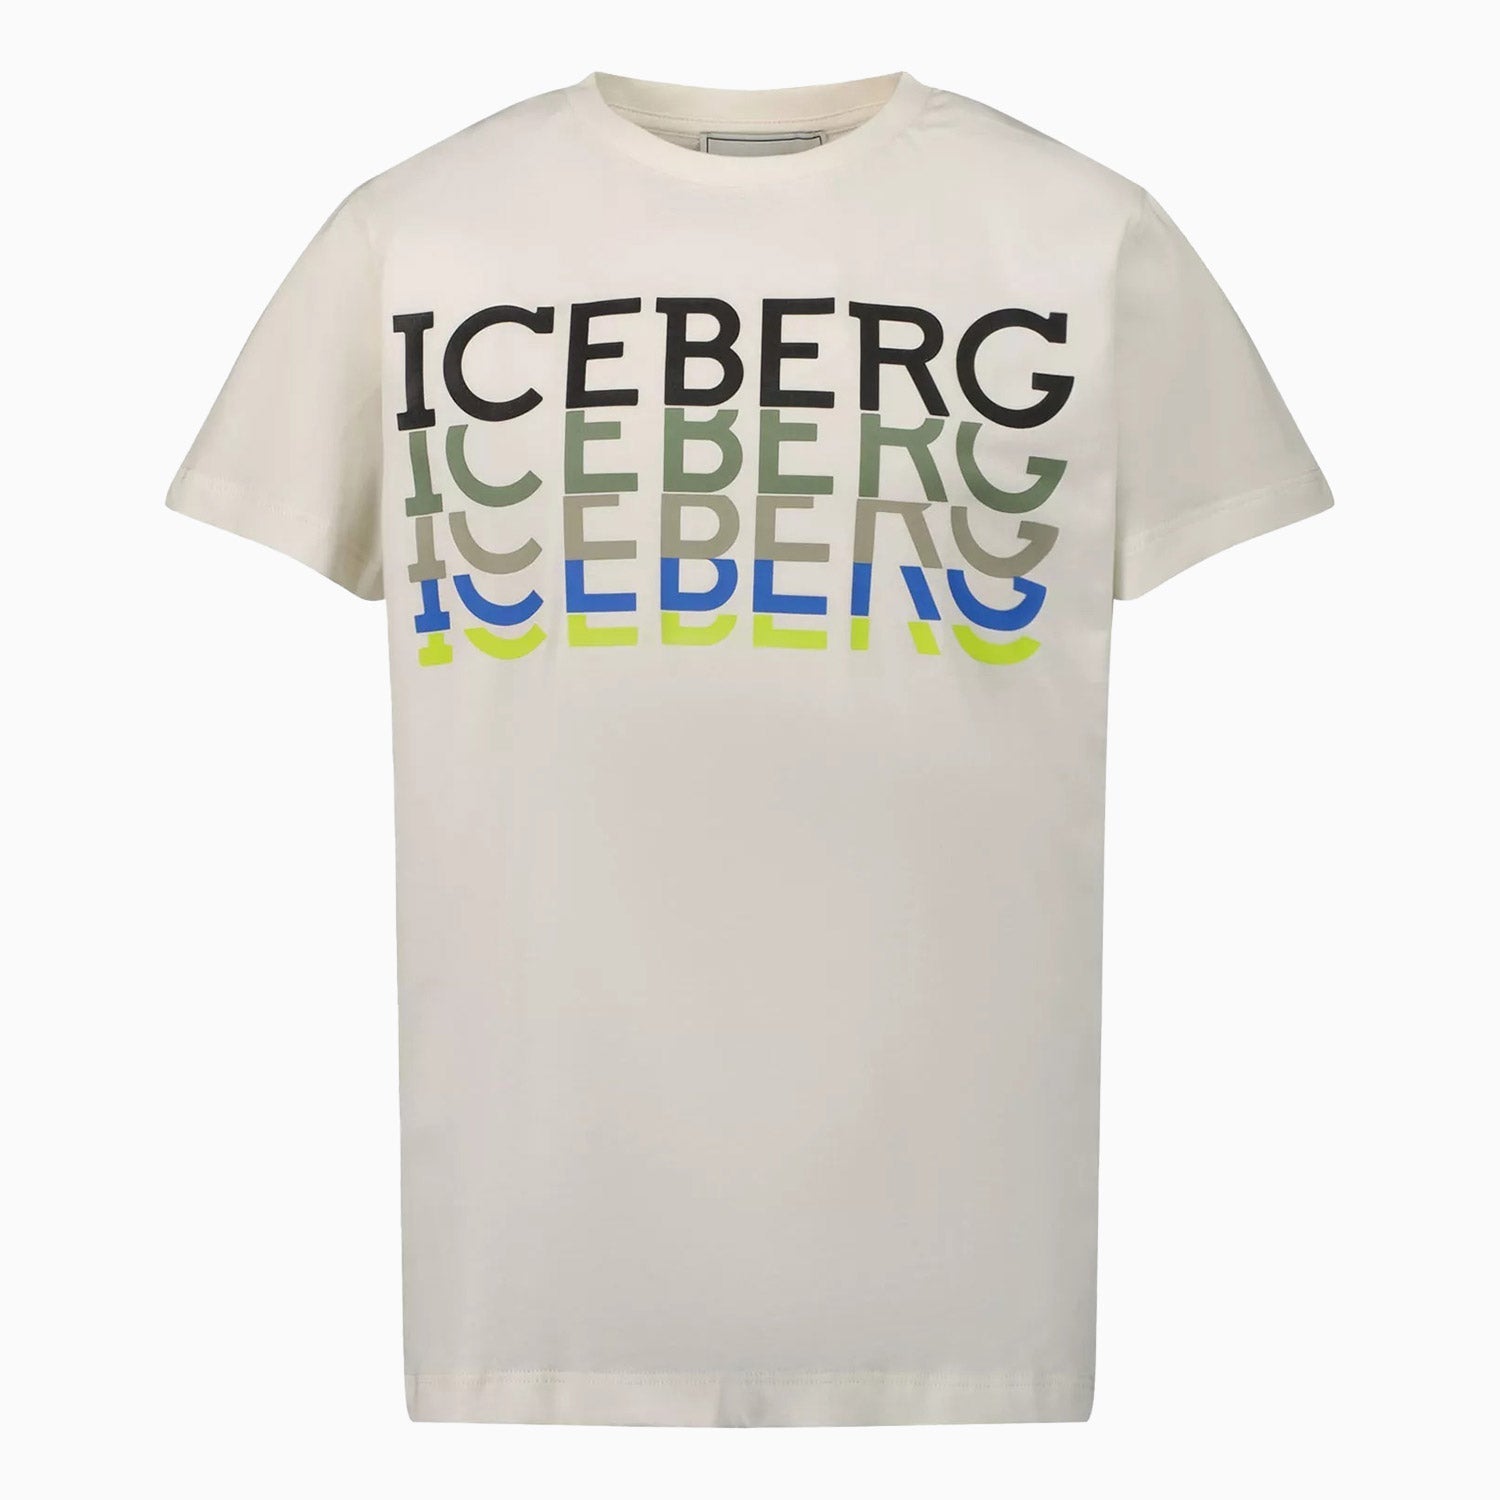 Iceberg Kid's T Shirt - Color: Panna - Kids Premium Clothing -